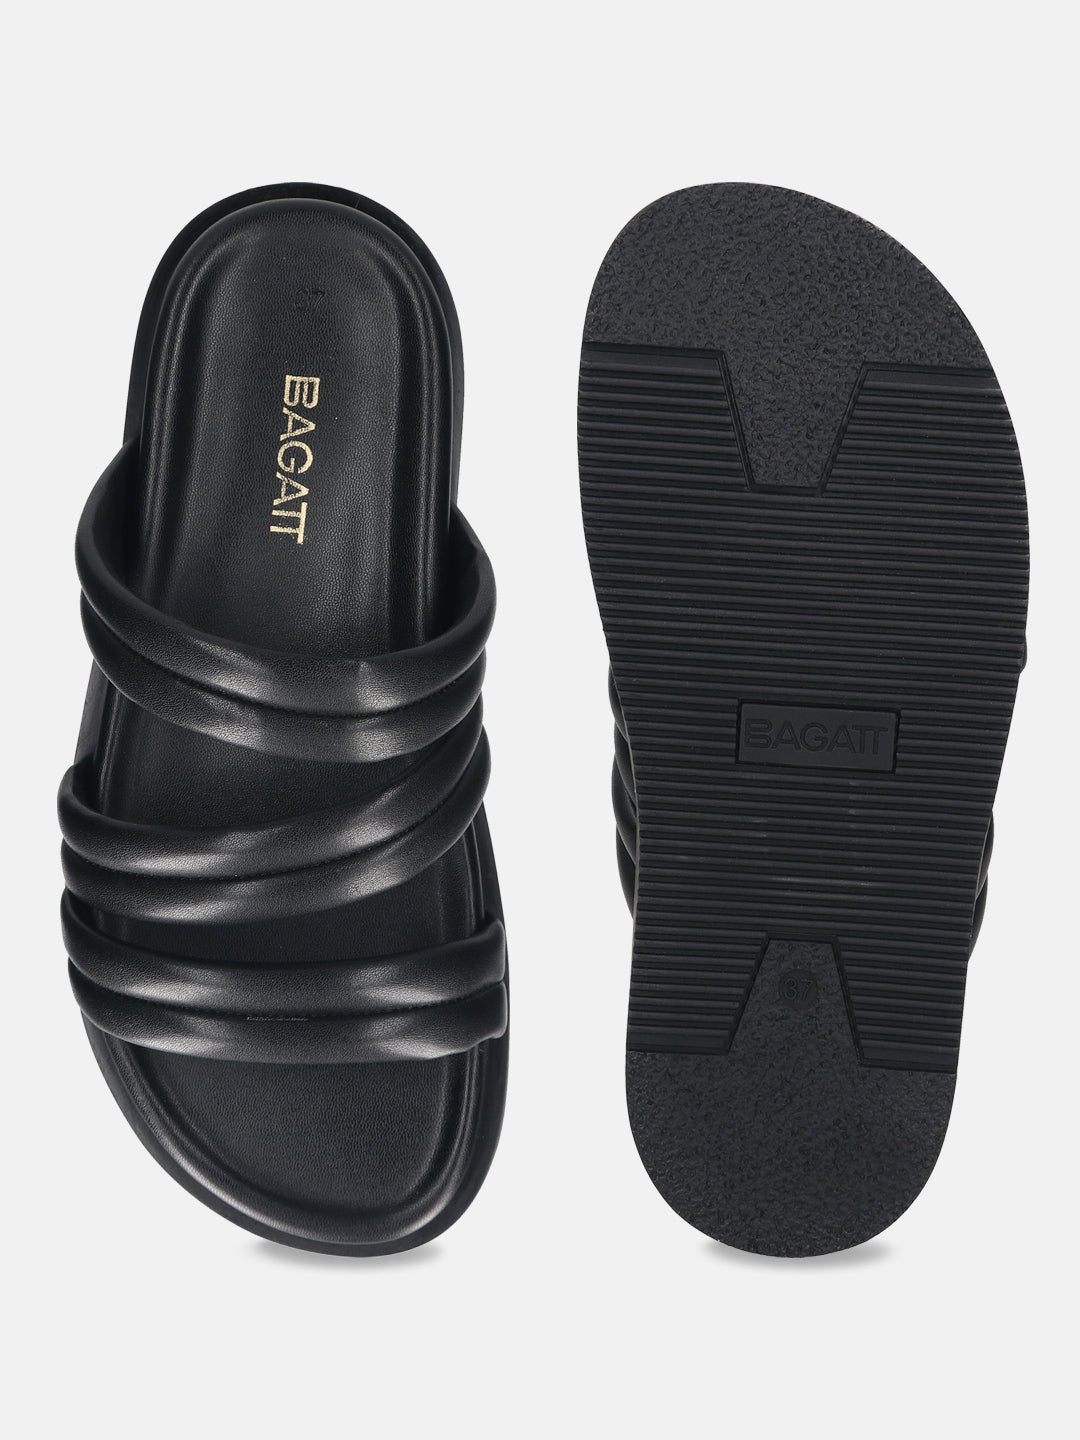 Chandra Black Flatform Sandals